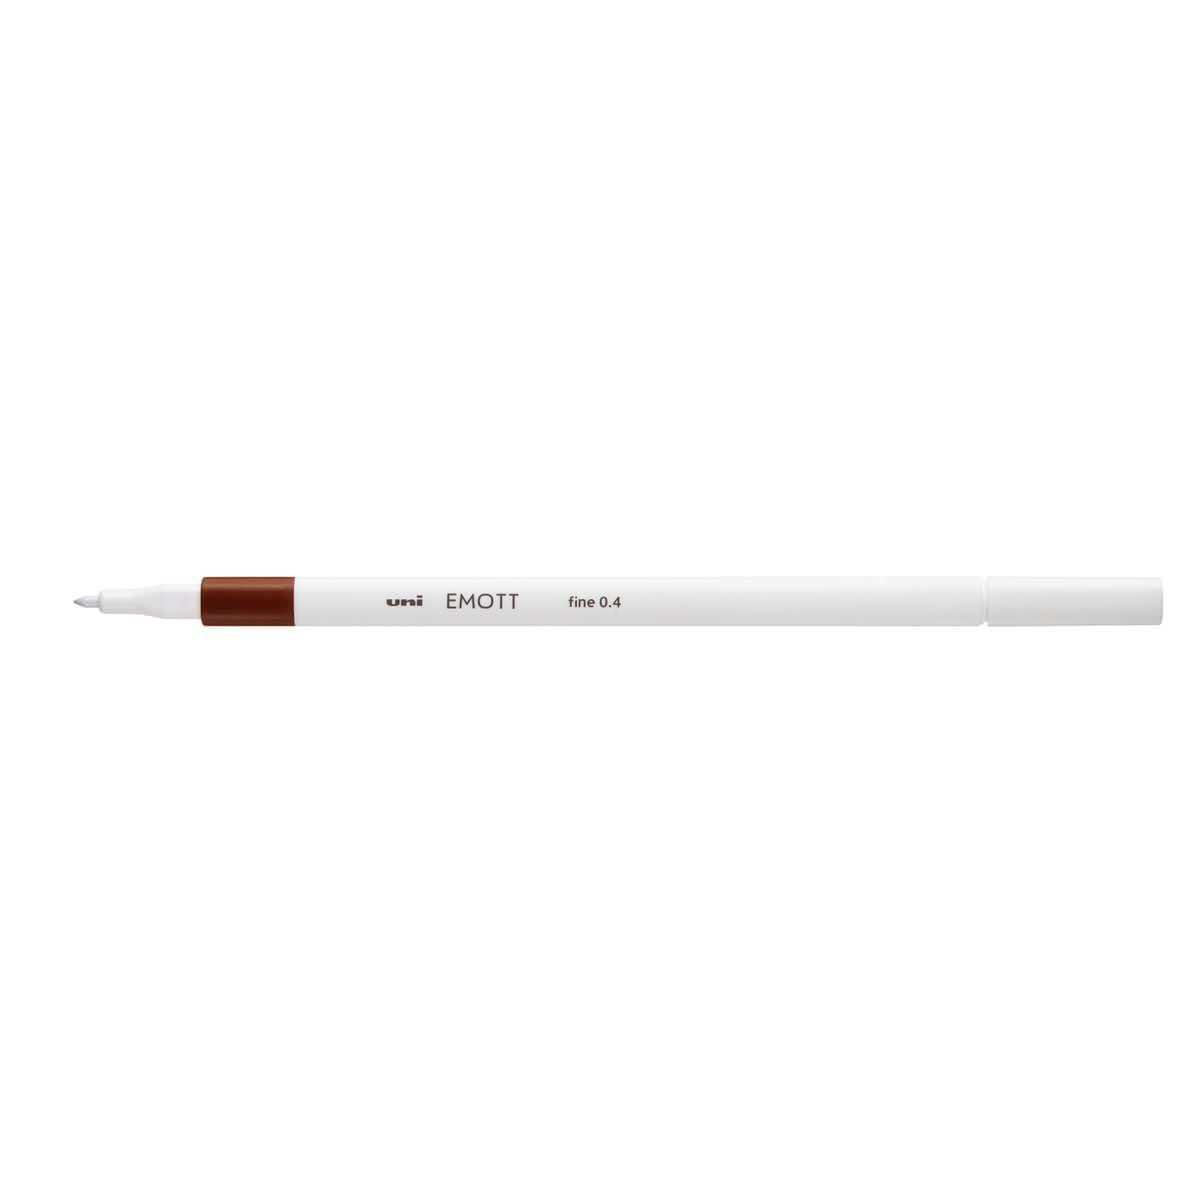 Emott ever fine Fineliner - Brown 21 - Uni Mitsubishi Pencil - Tidformera